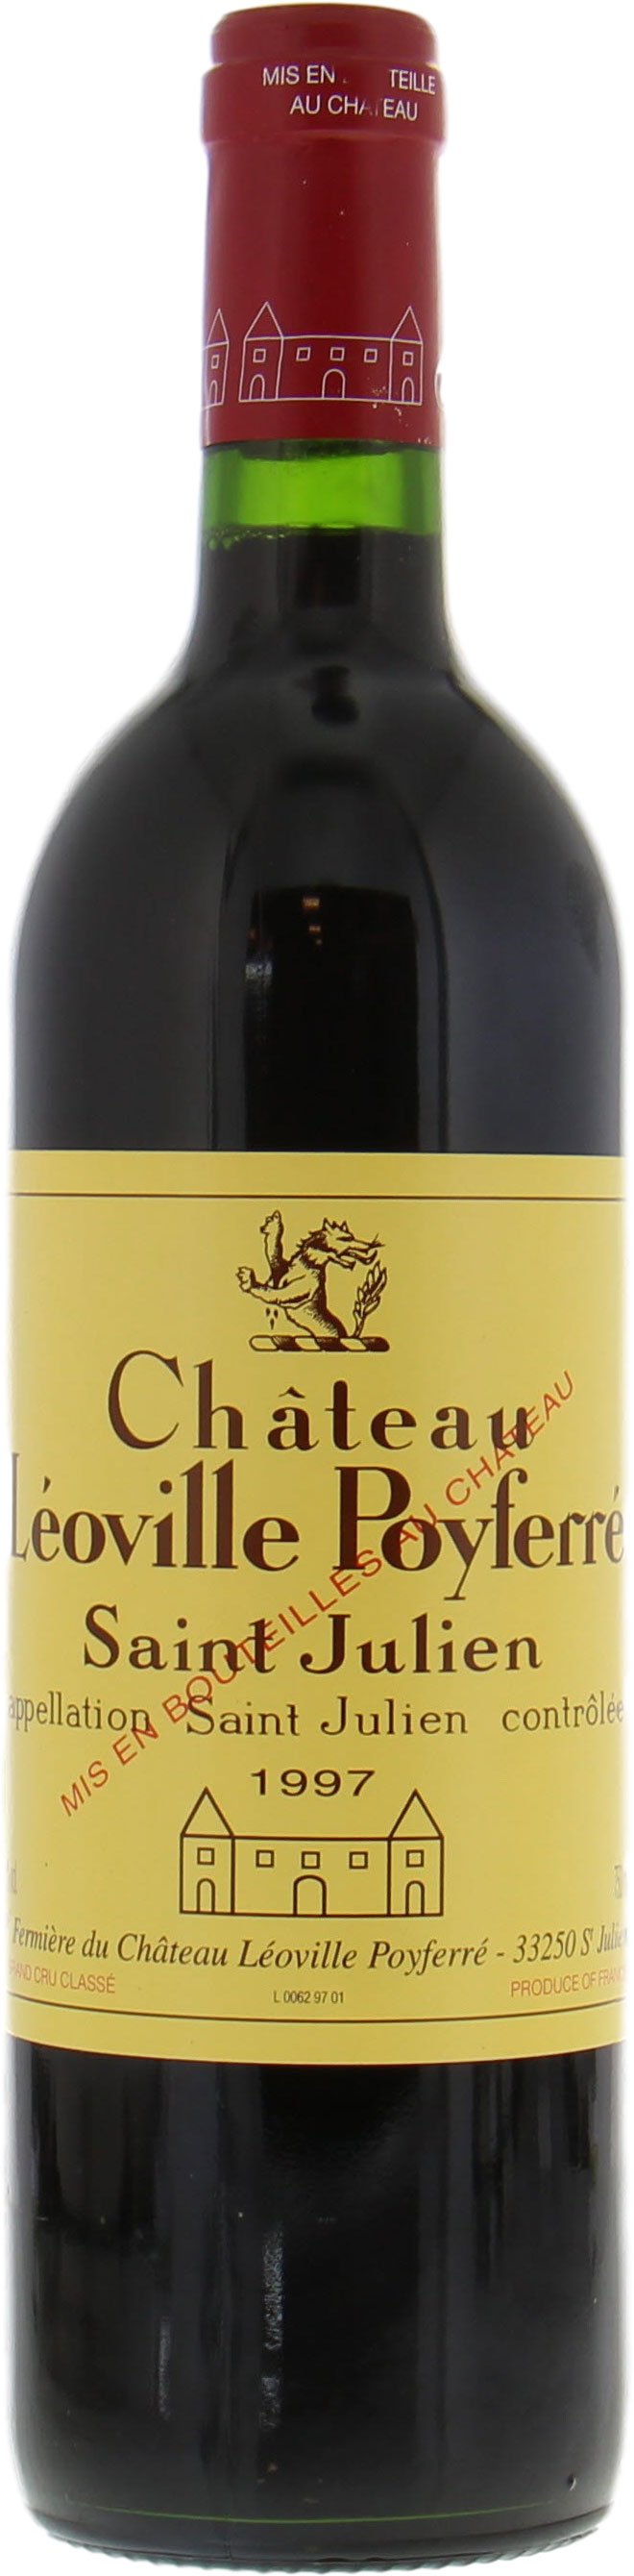 Chateau Leoville Poyferre - Chateau Leoville Poyferre 1997 Perfect